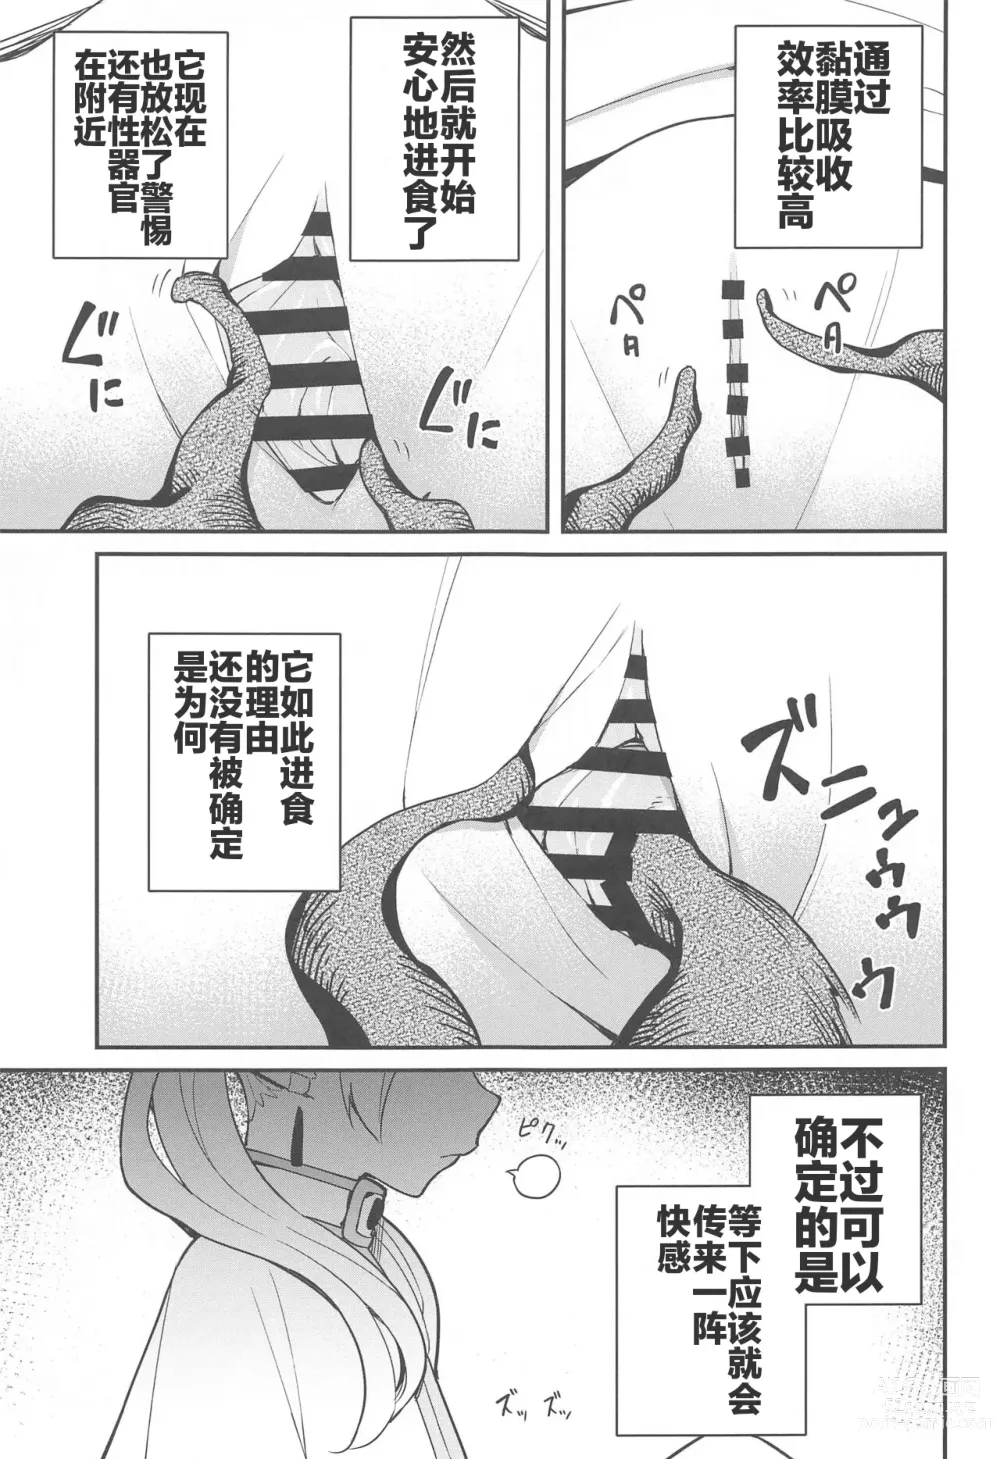 Page 9 of doujinshi 逃出深坑陷阱